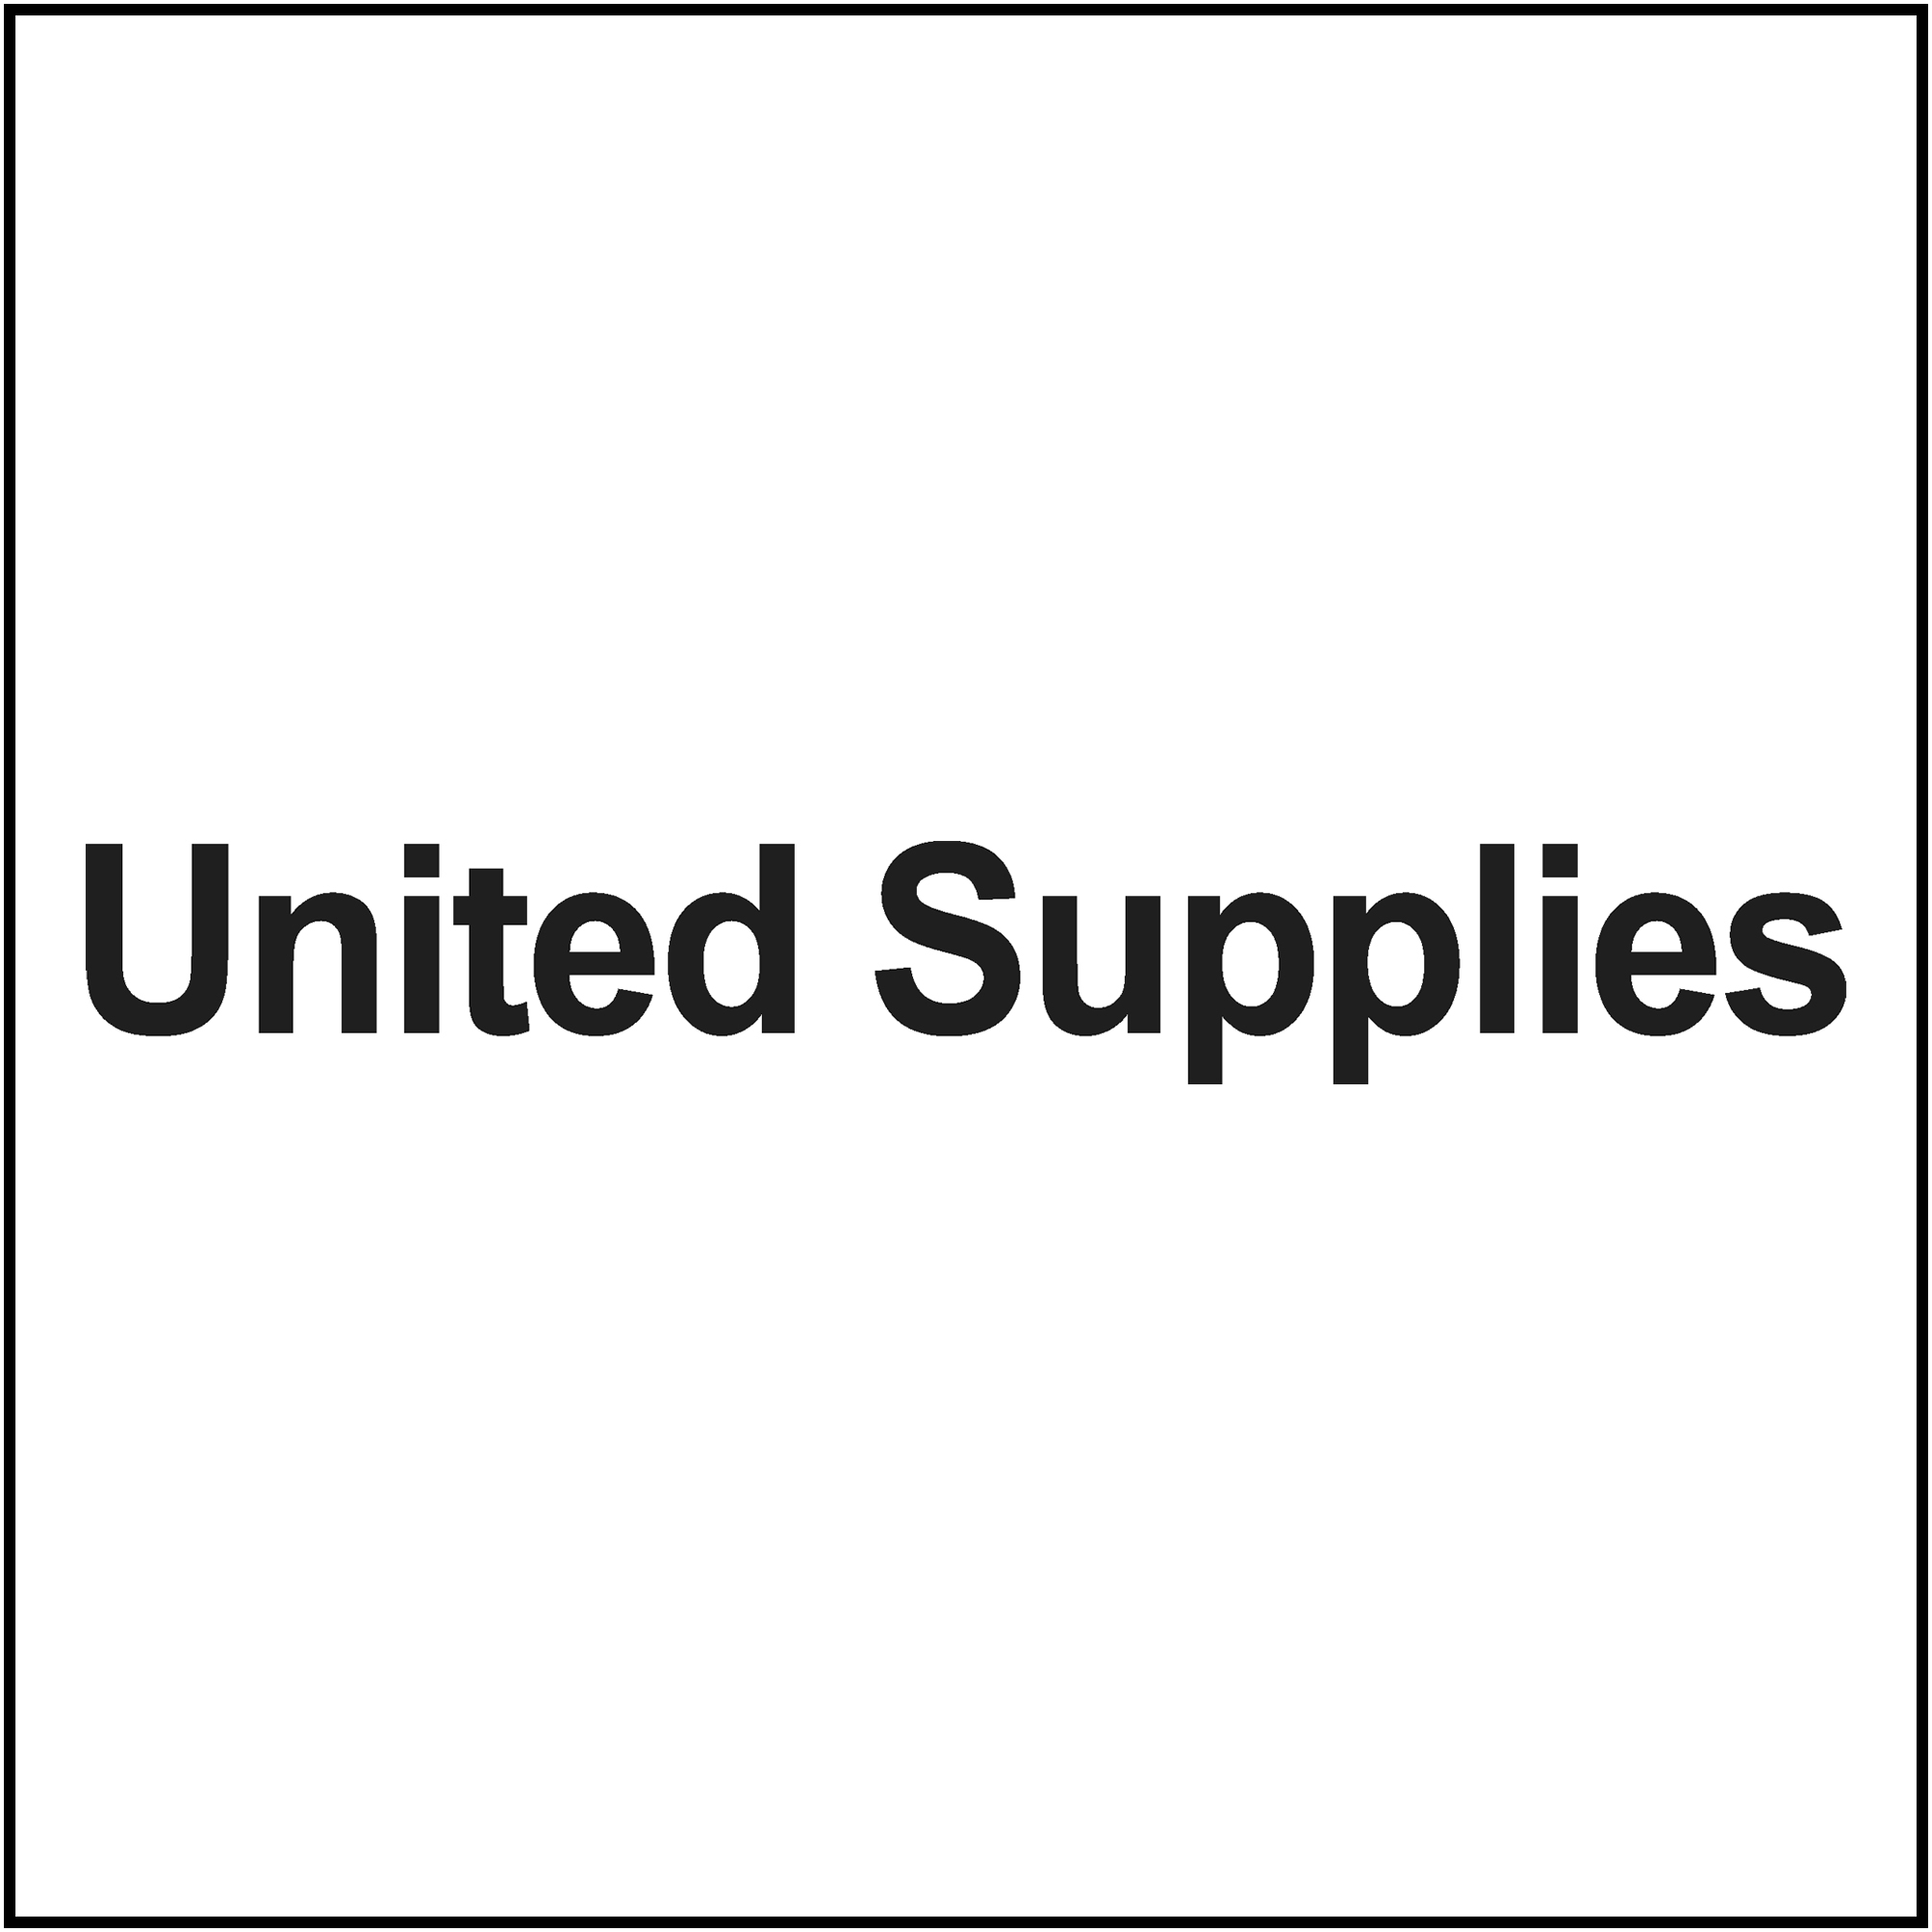 UNited Supplies logo